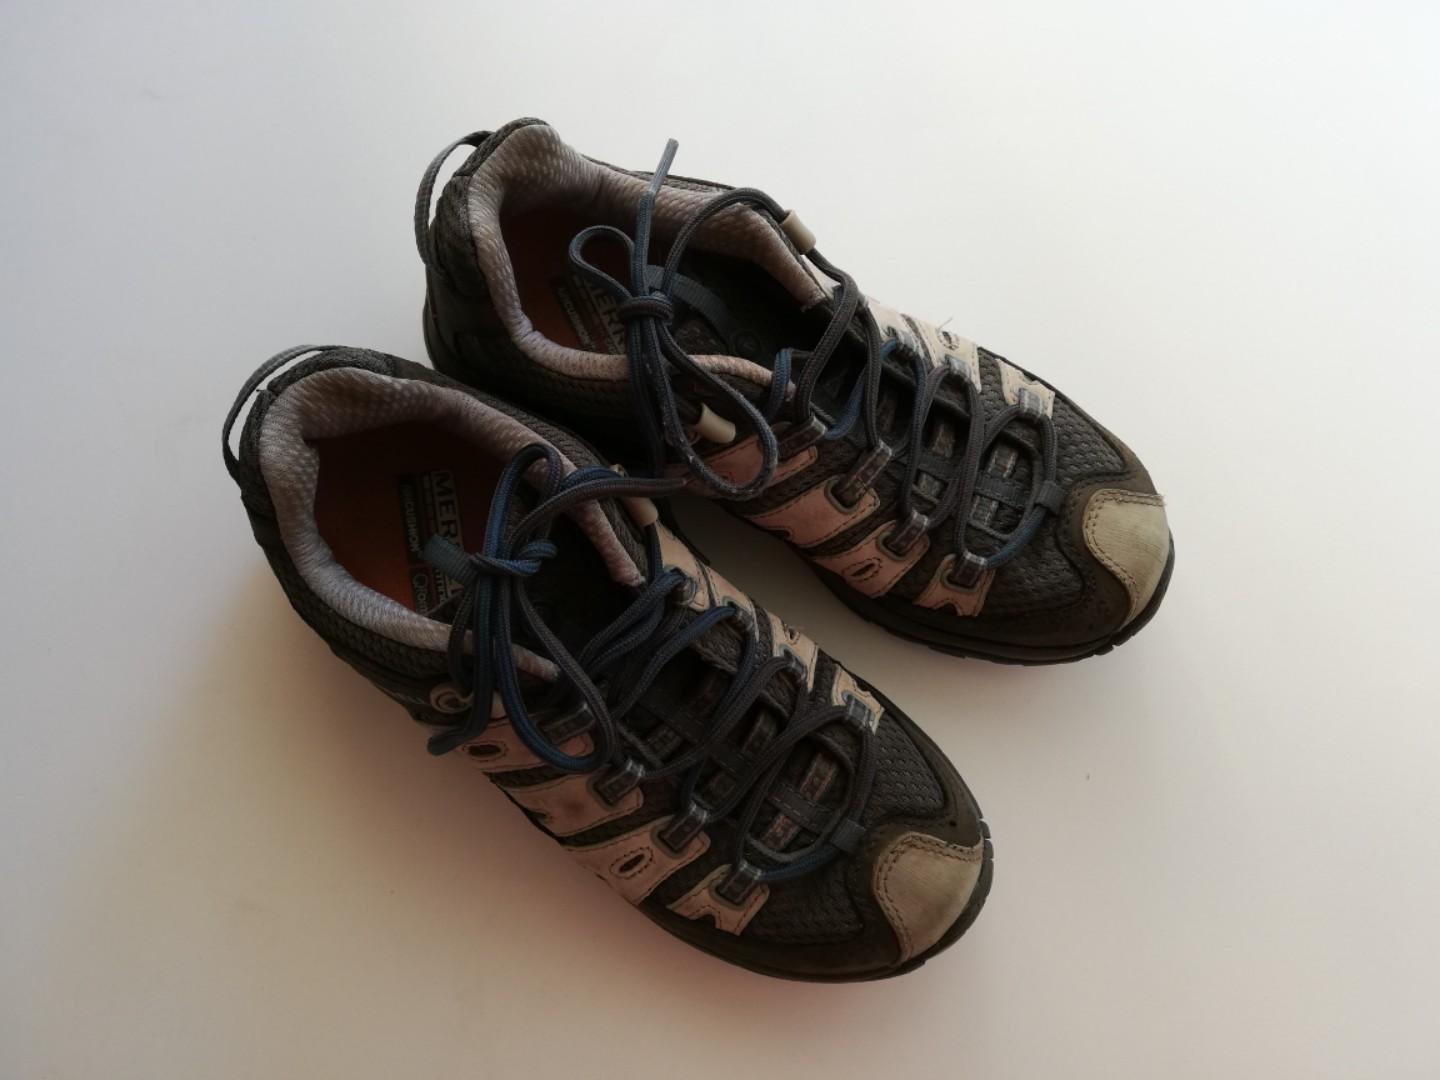 merrell ortholite shoes